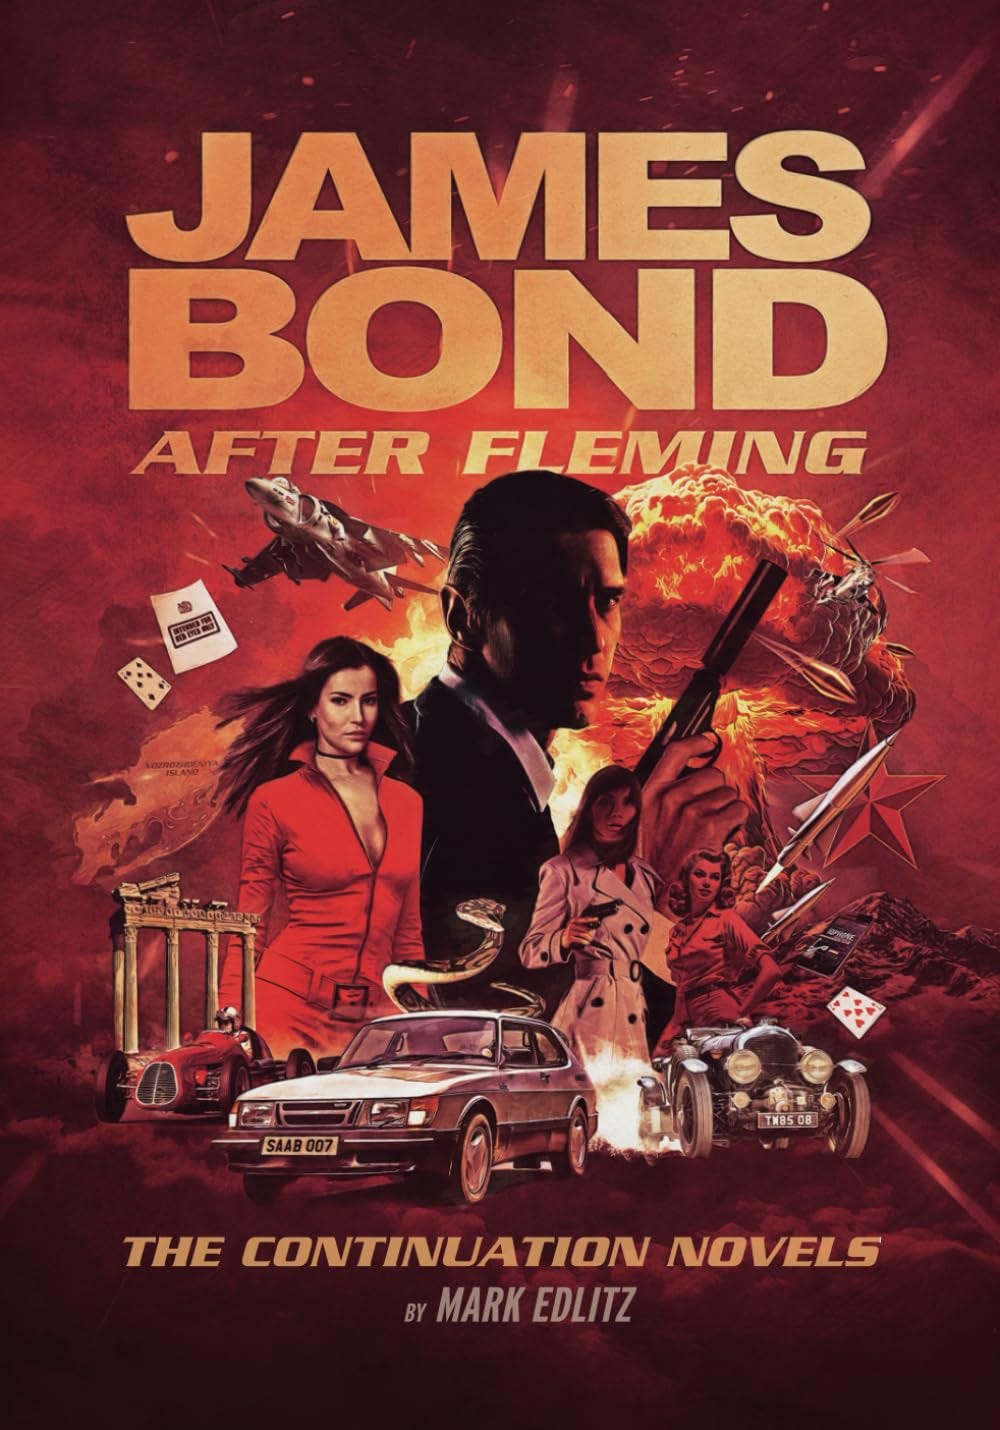 James Bond After Fleming by Mark Edlitz